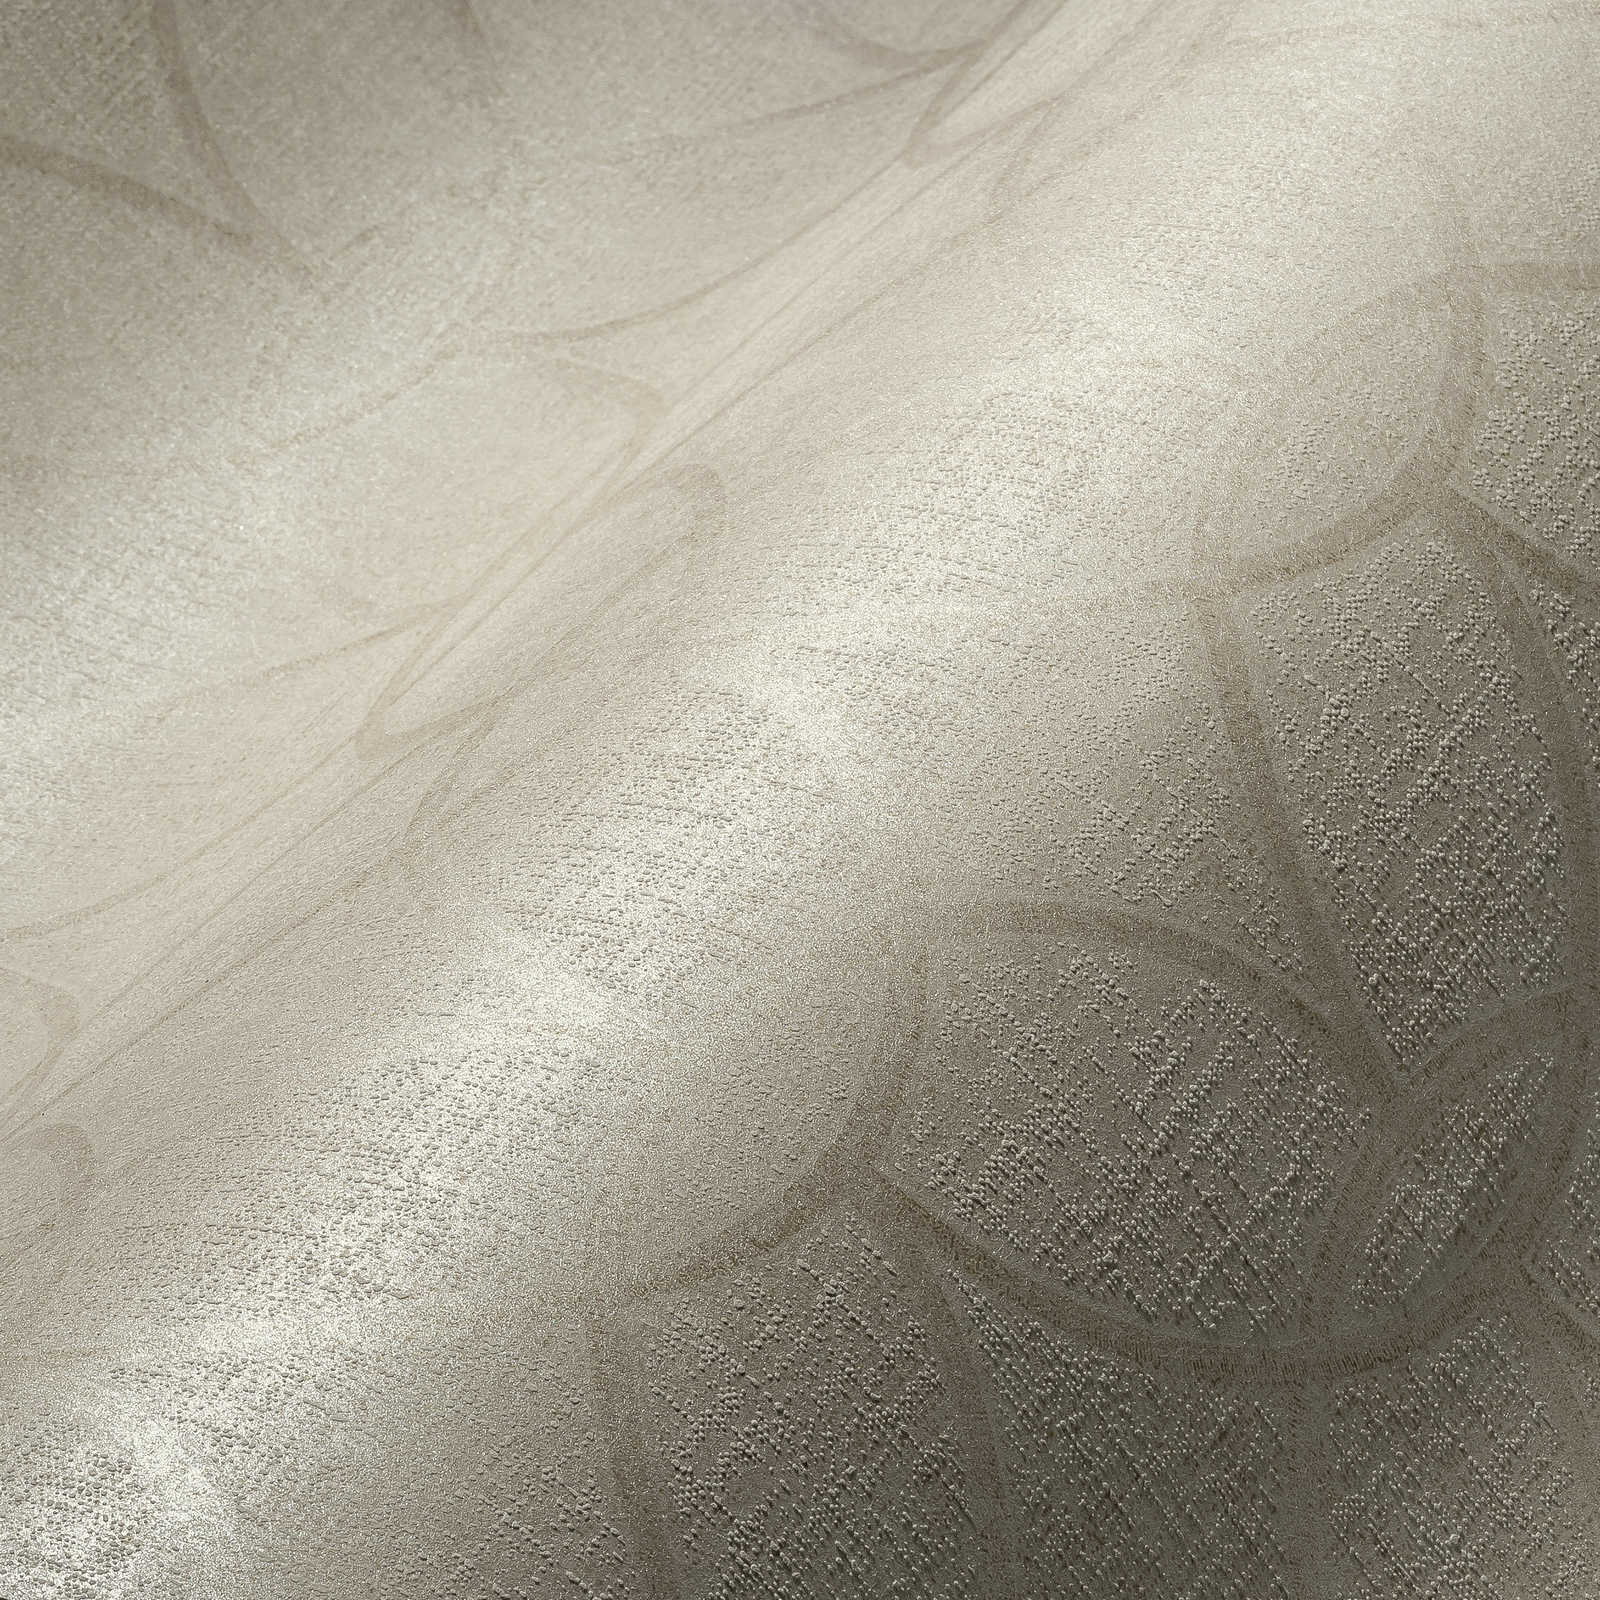             Cream white wallpaper with bright glossy pattern & geometric design - white
        